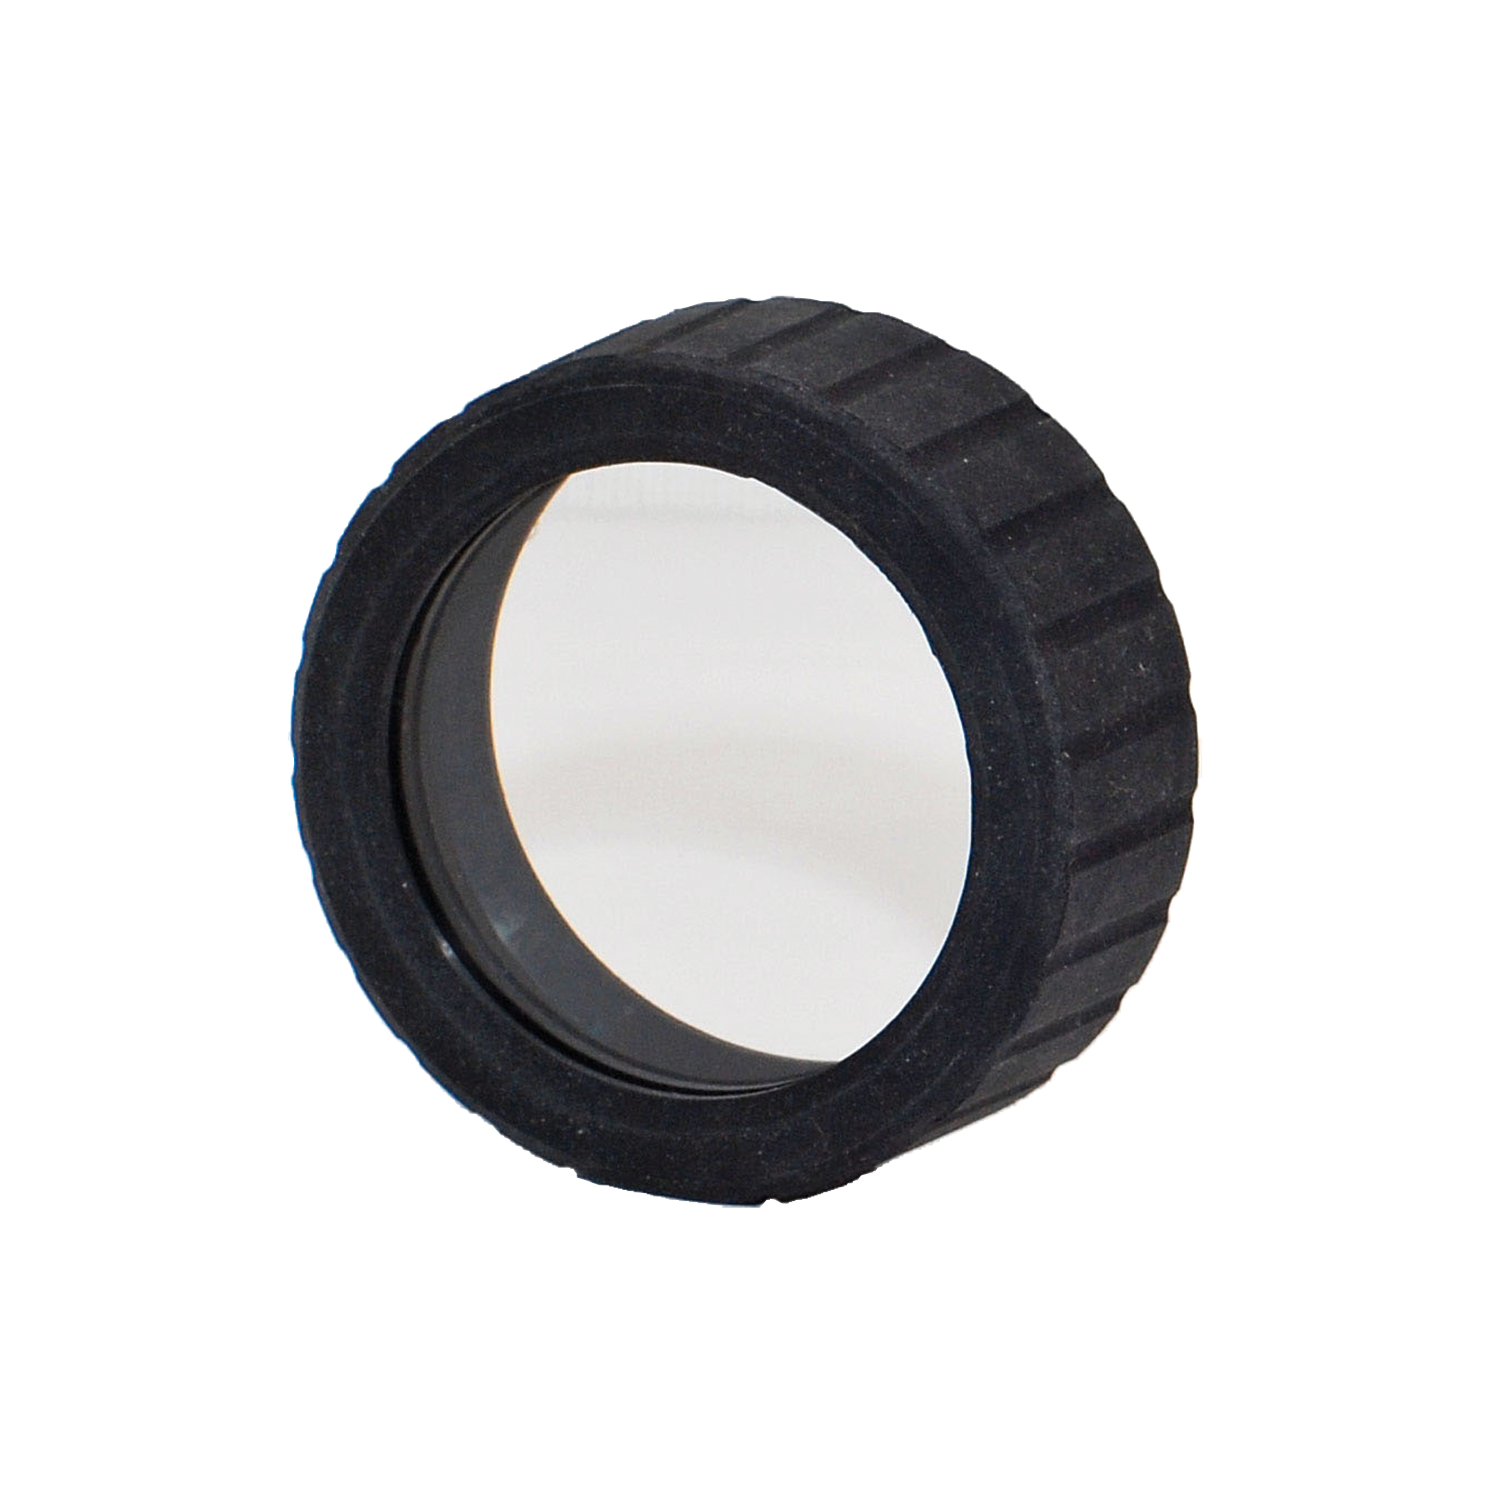 uVision Borofloat Filter Protector For Models UV-365EH, UV-365ES, UV-365HC, UV-365HCR, UV-365MEH, UV-365MHC, UV-365MSBLC, UV-365SBLC, UV-365ZEH, UV-365ZHC, and UV-365ZSBLC